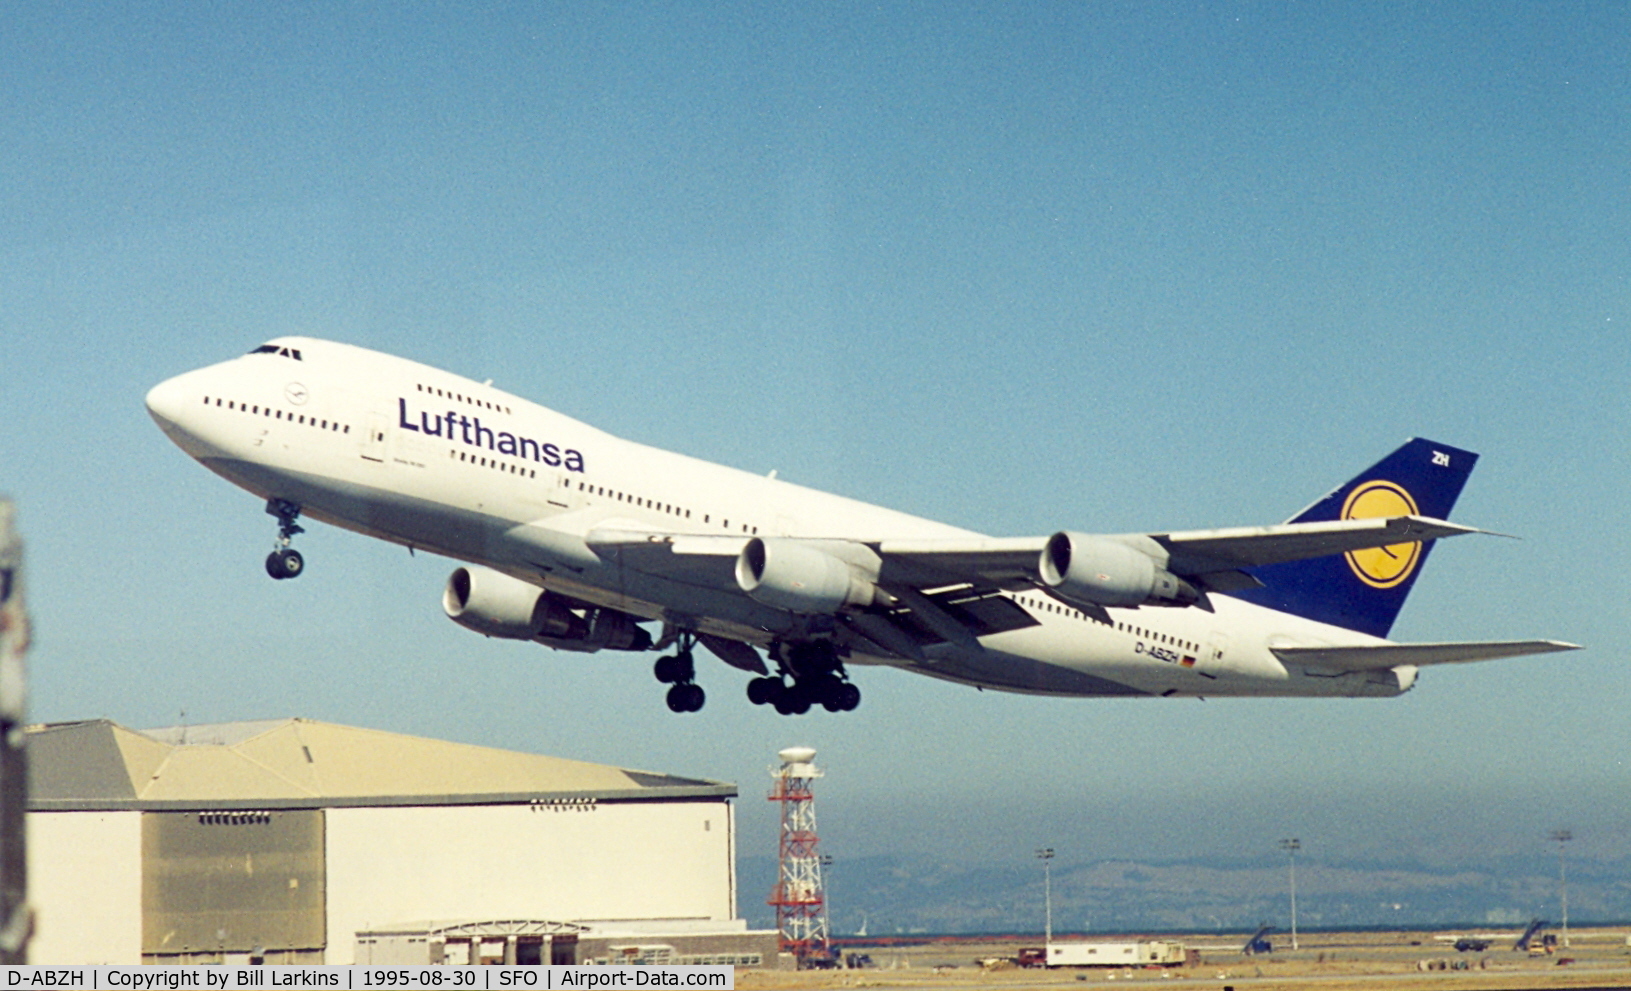 D-ABZH, 1986 Boeing 747-230B C/N 23622/665, Taking off in August 1995.